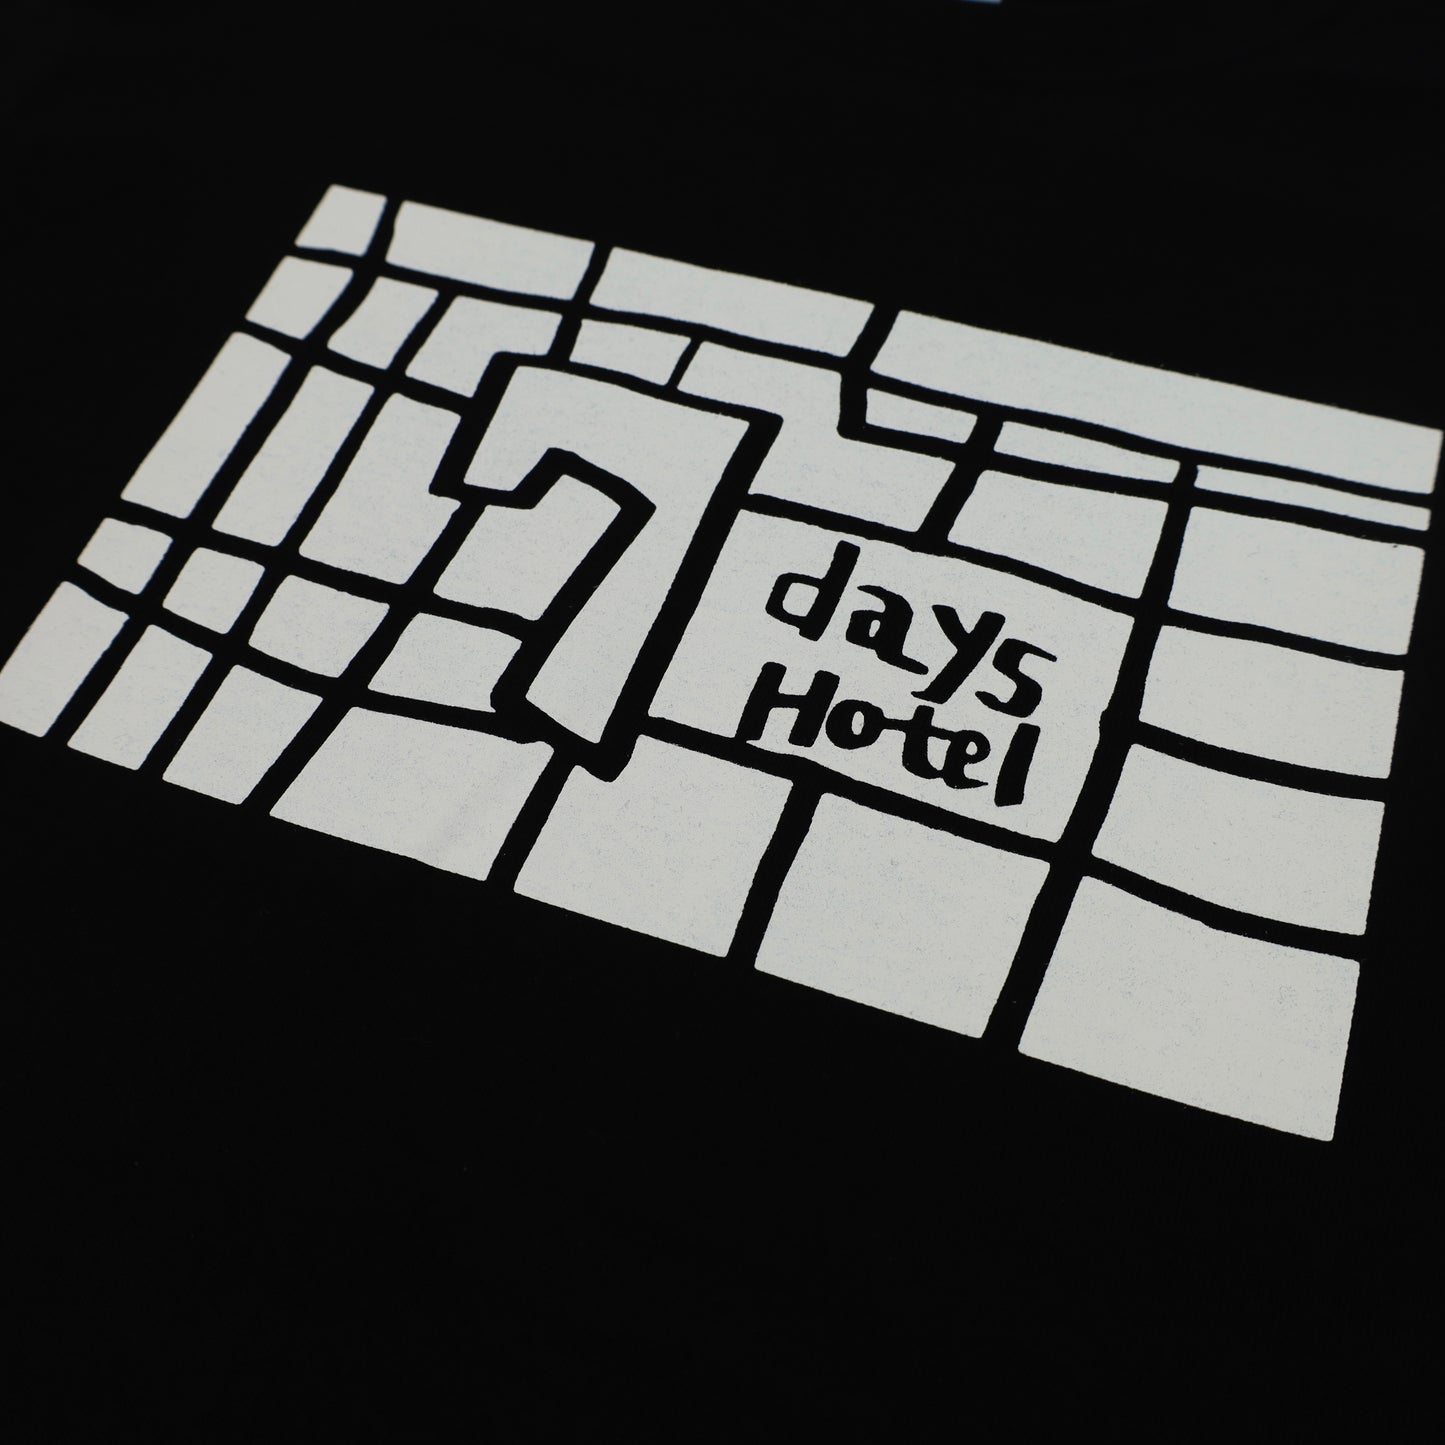 7days hotel Tシャツ